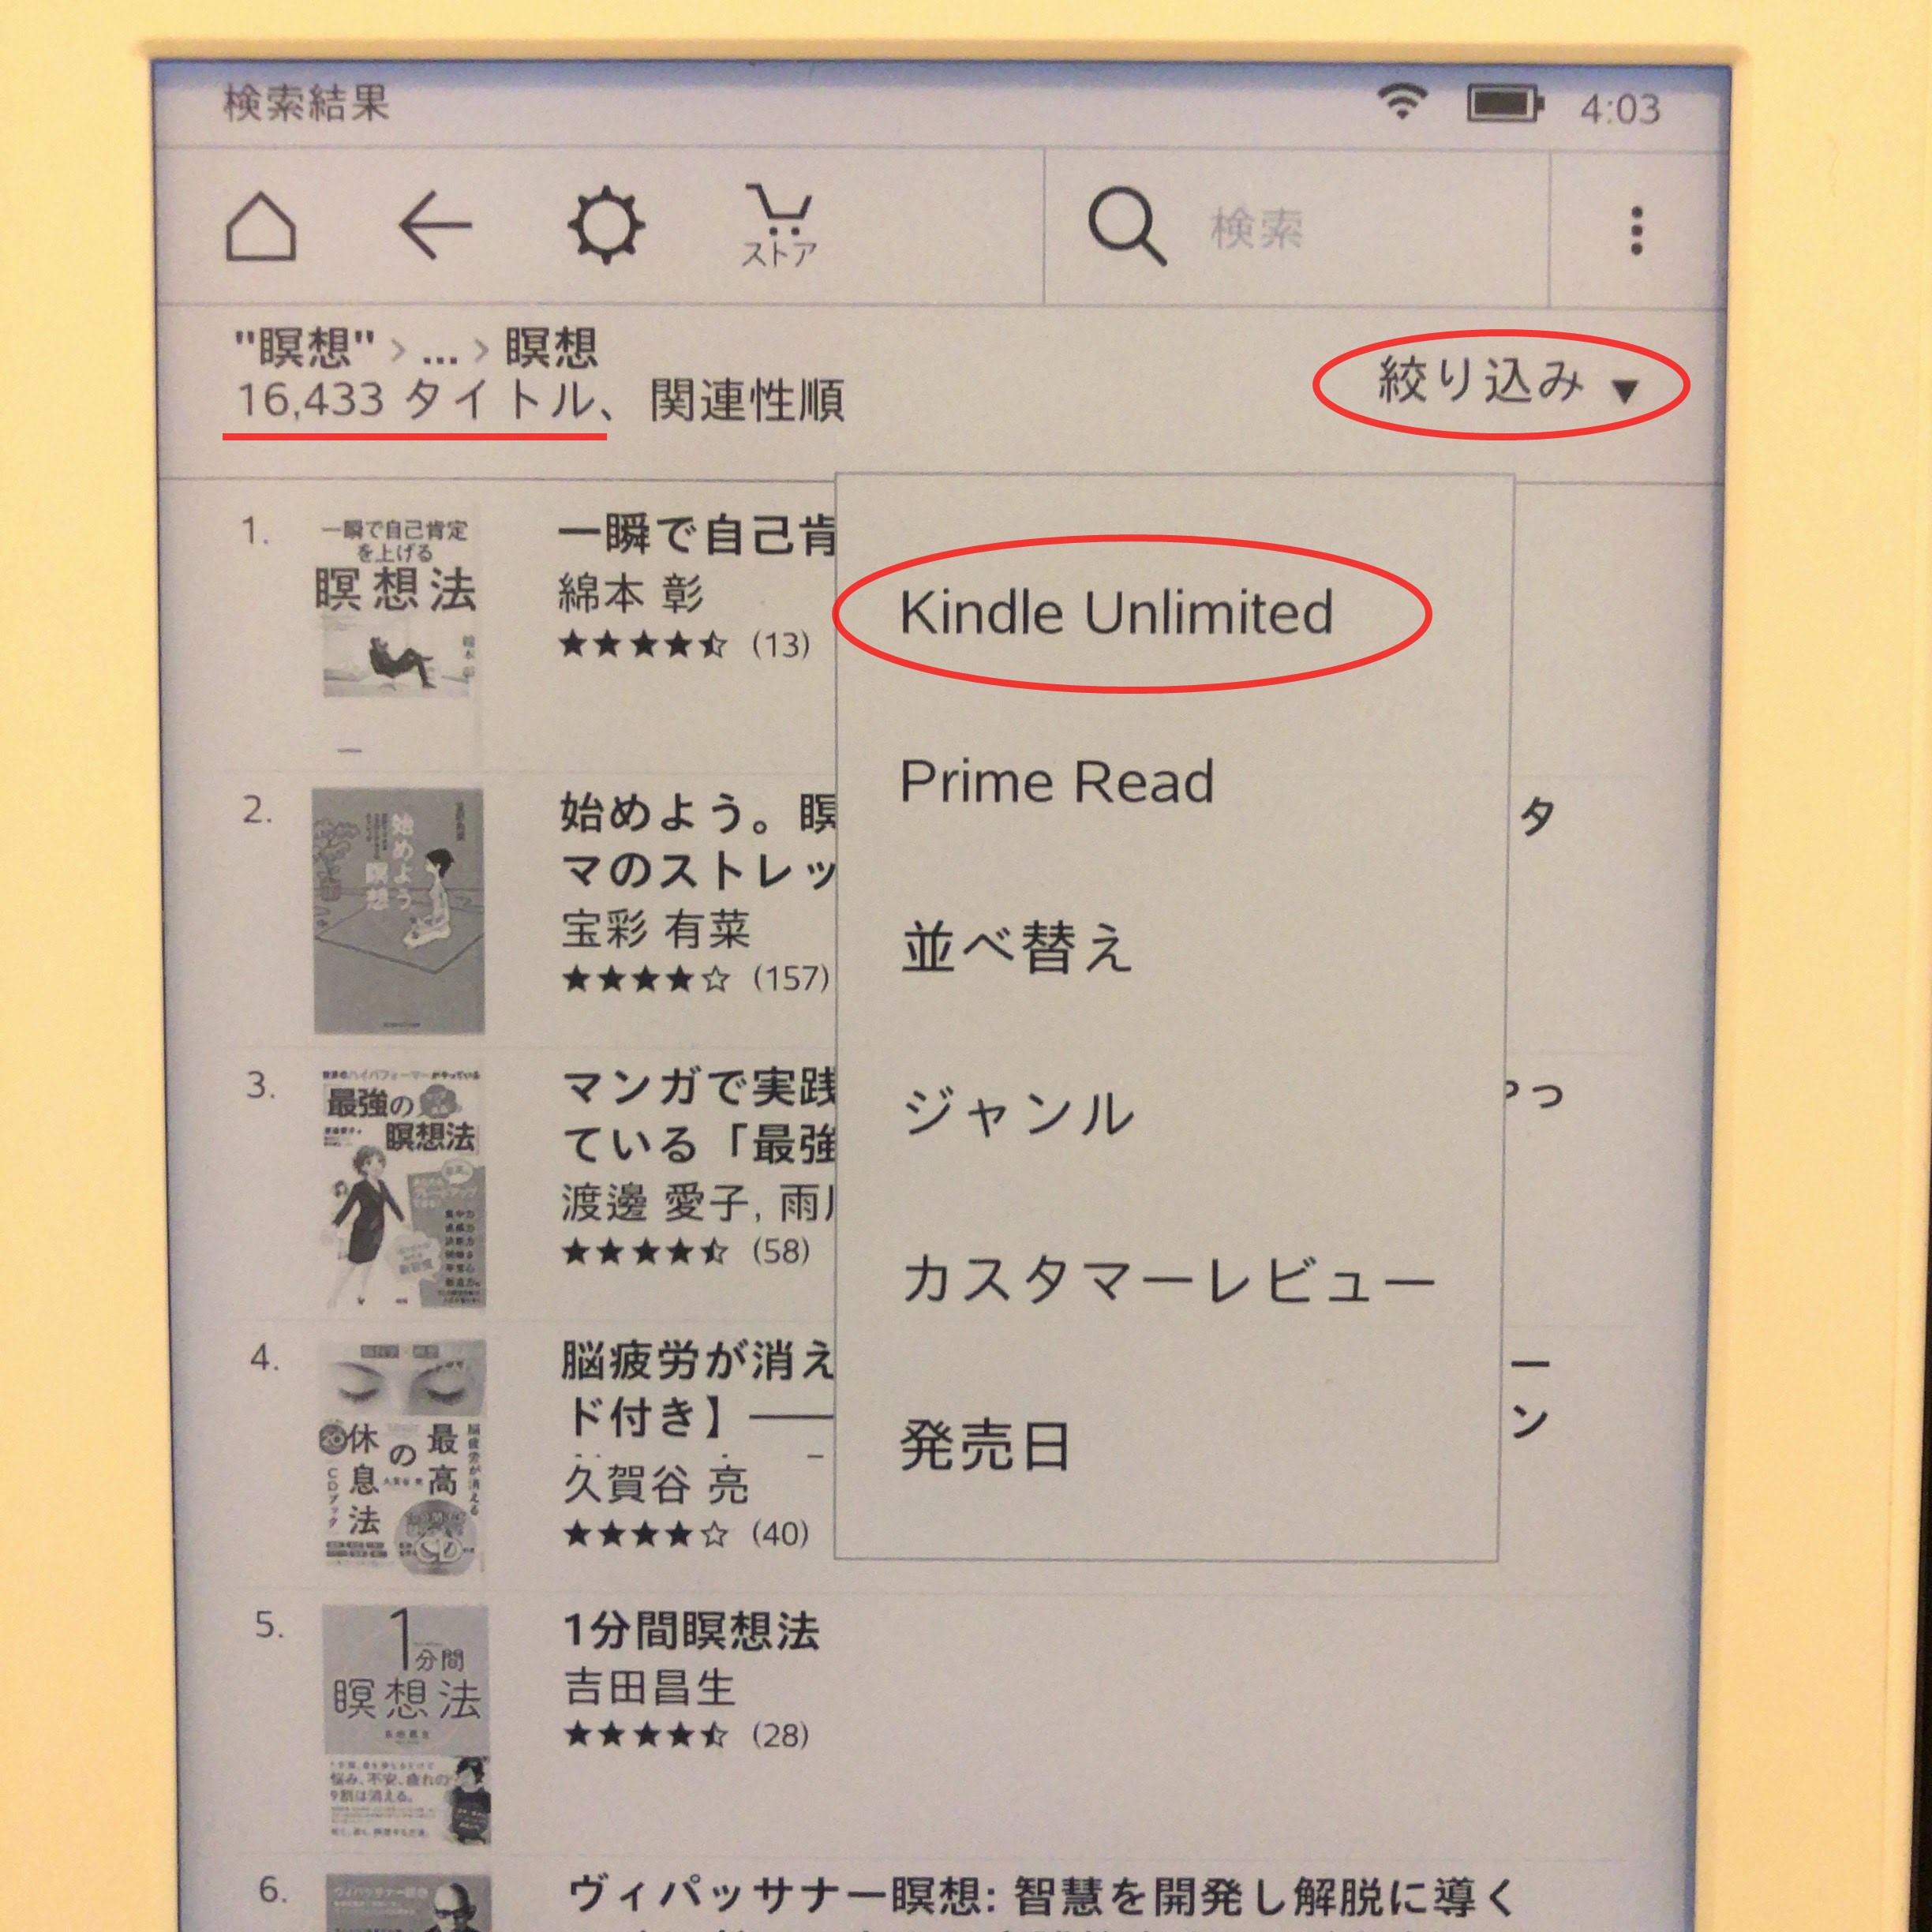 Kindle Unlimitedは海外からでも使える 登録方法 悪用禁止なおすすめ利用法 カーリーブログ